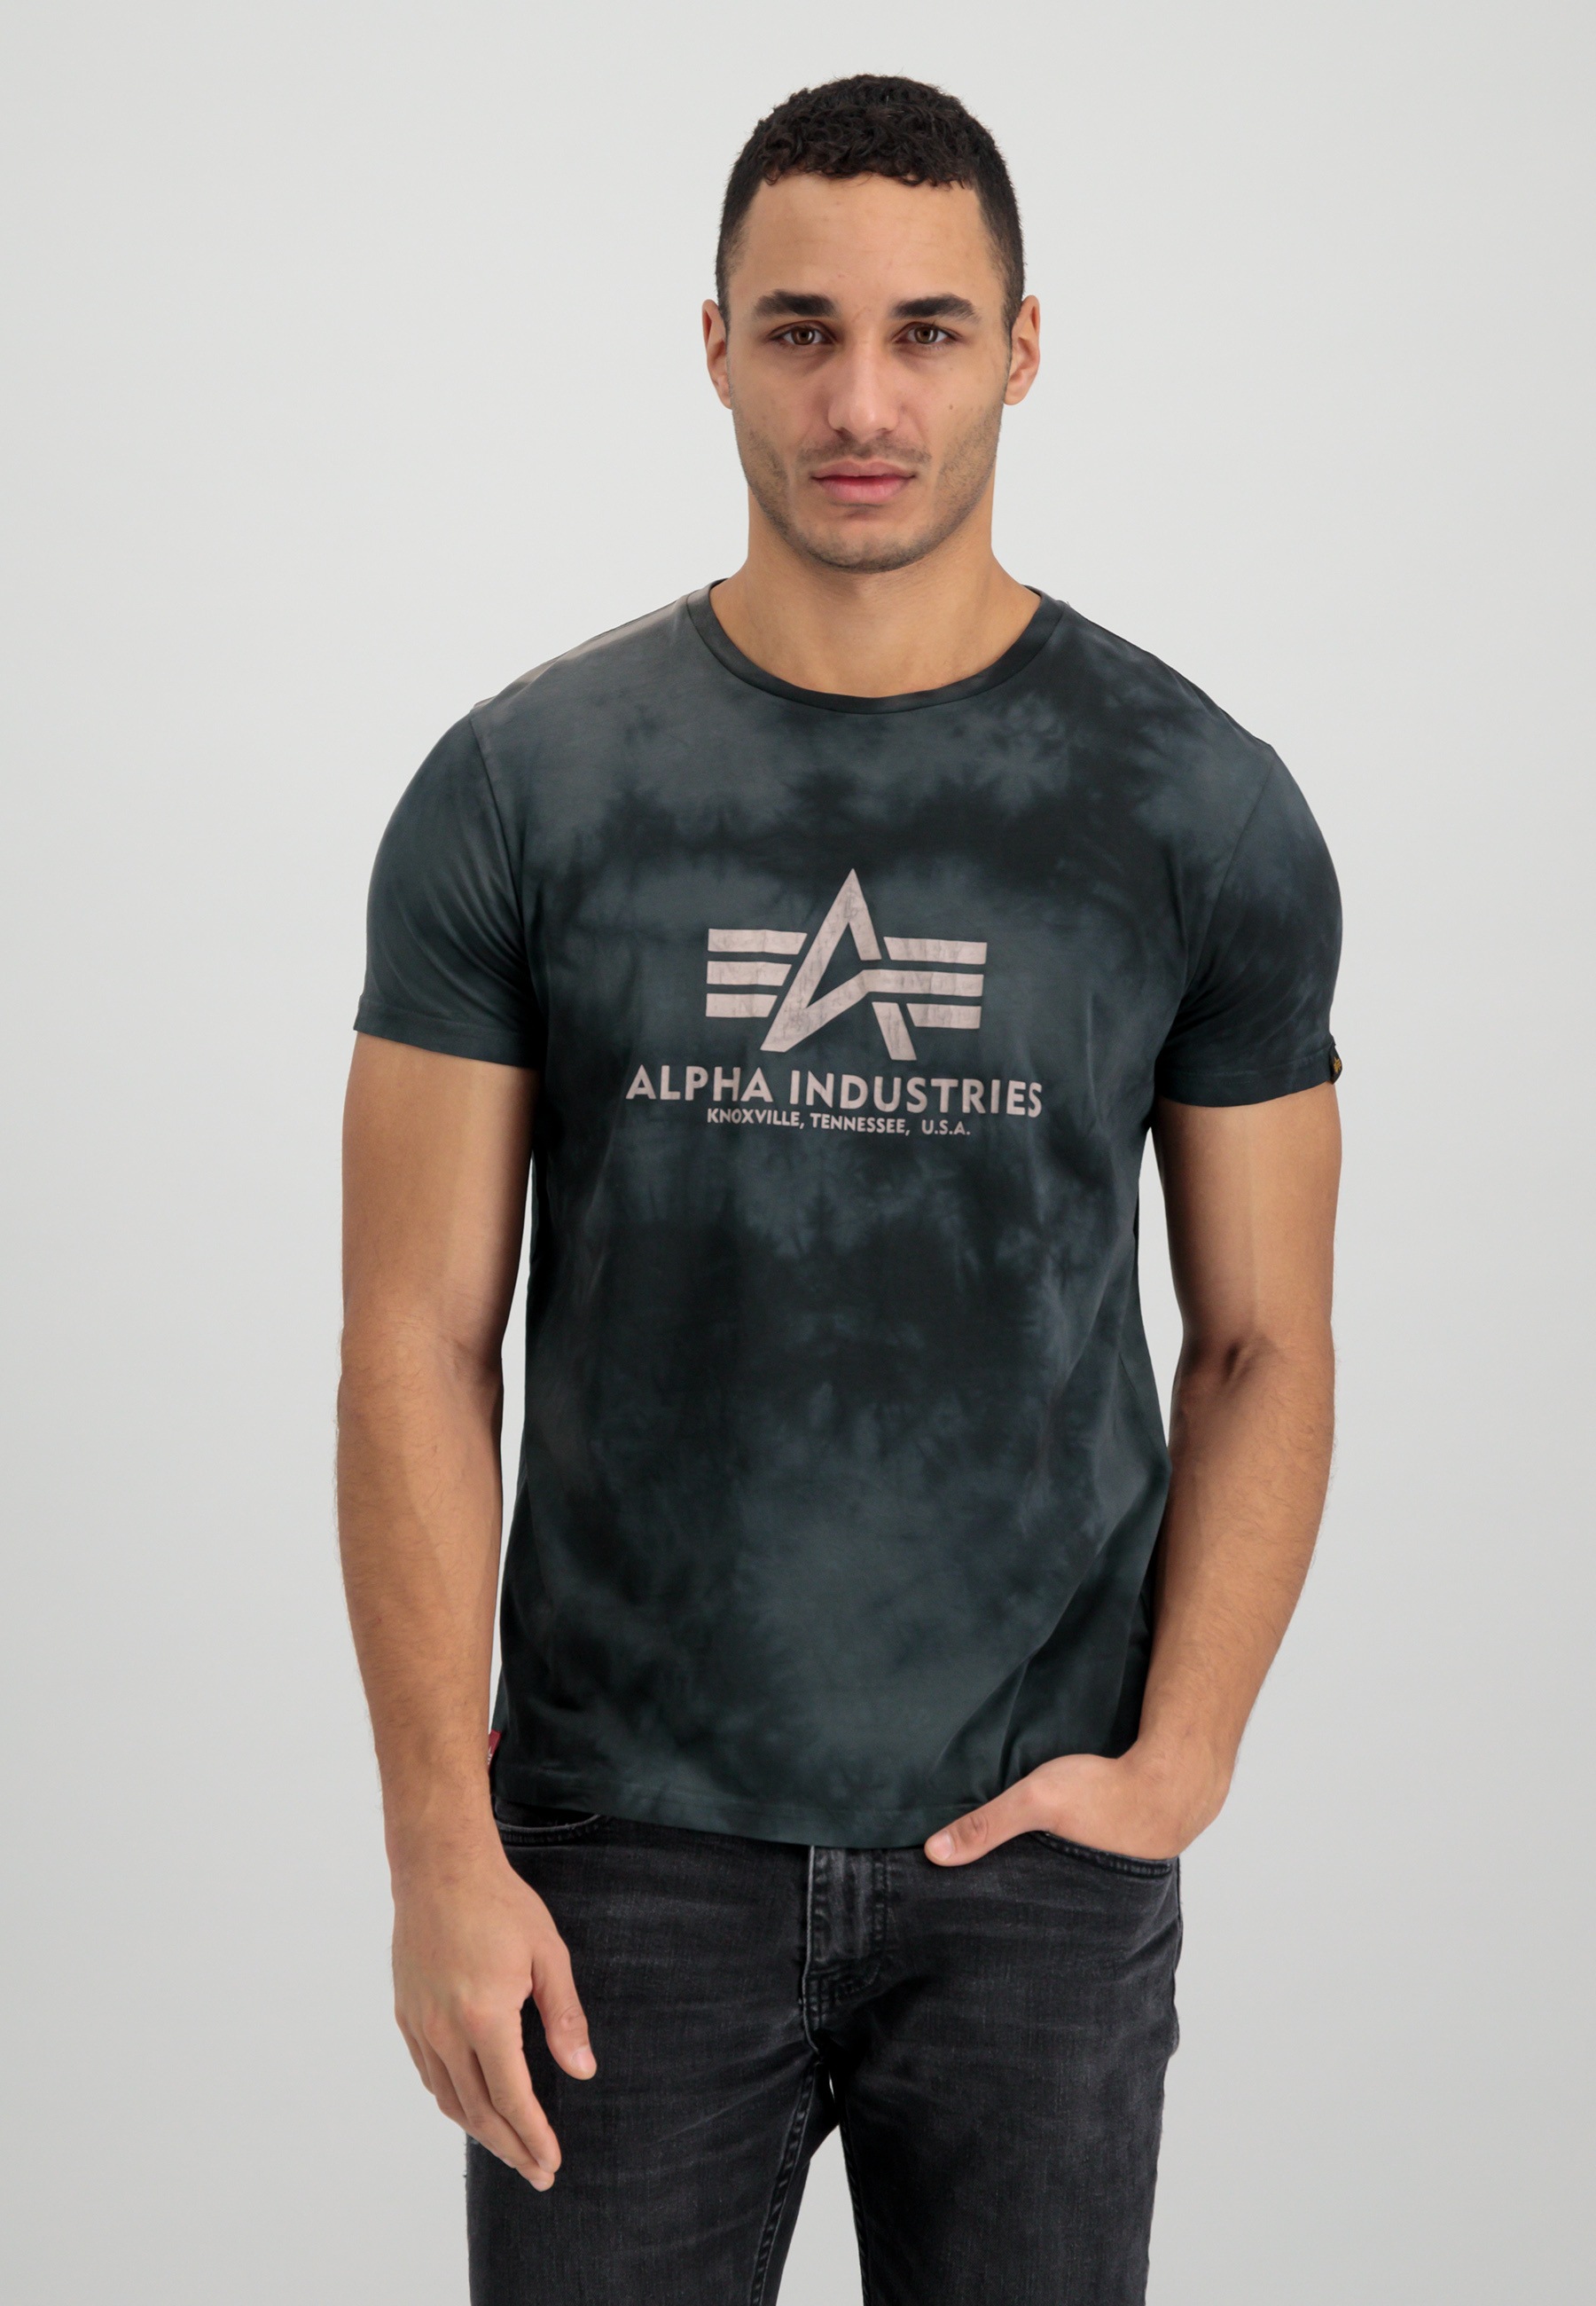 Industries »Alpha Industries T-Shirt Basic online Men T-Shirts Alpha kaufen - Batik« T